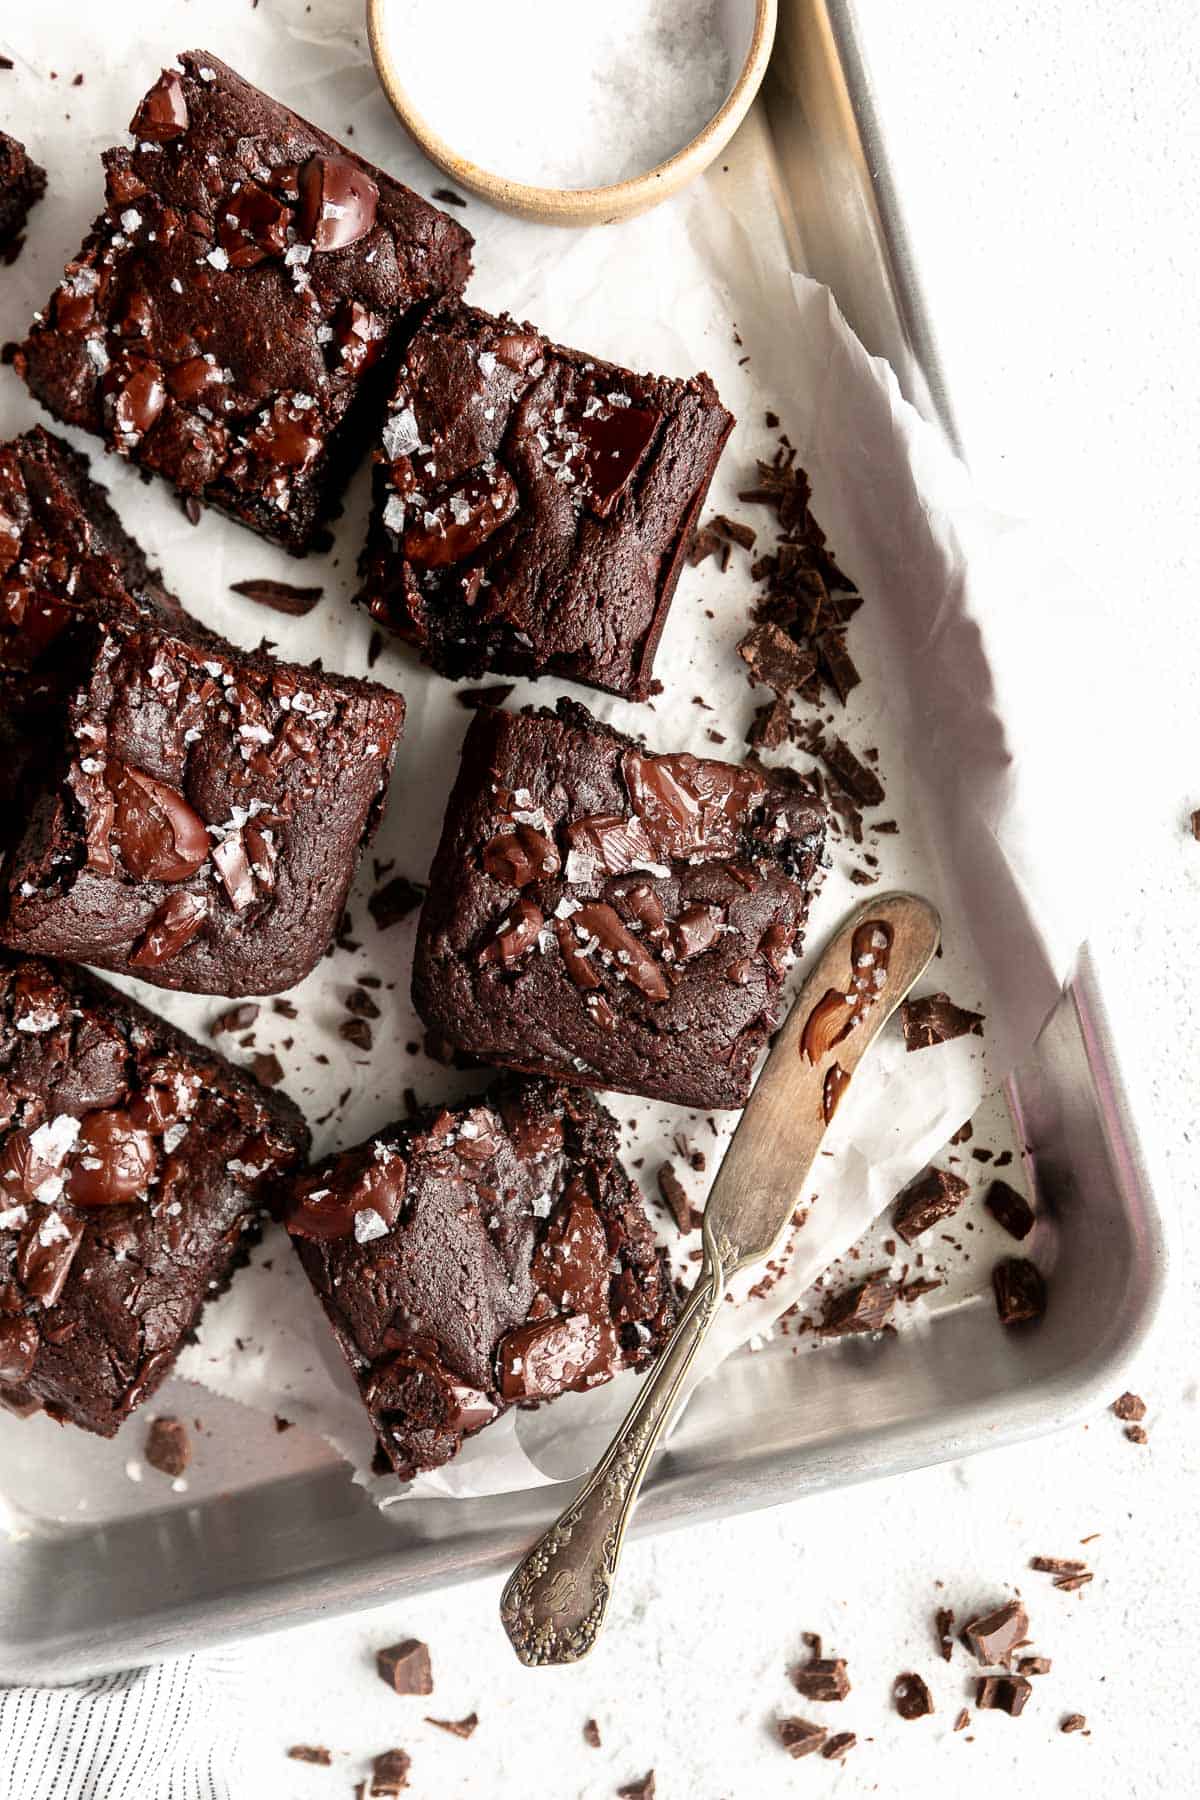 eggless brownies on a baking pan with chocolate chunks